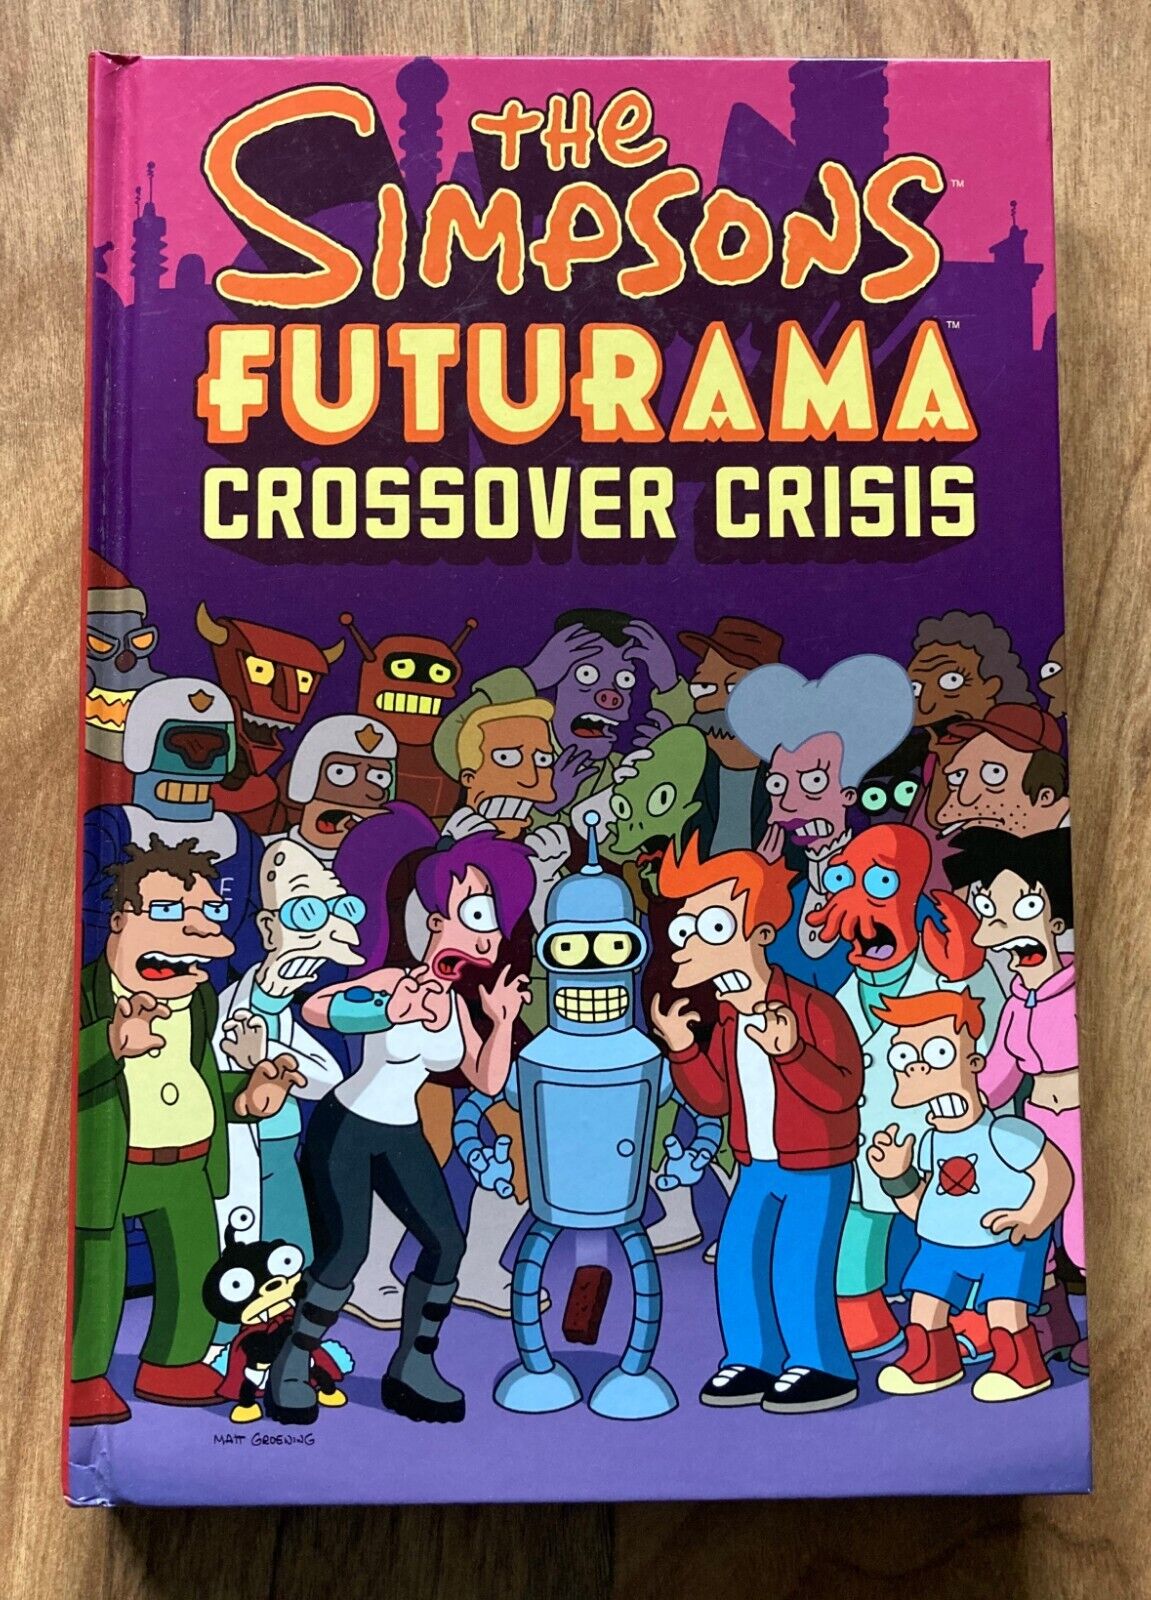 The Simpsons Futurama Crossover Crisis by Matt Groening